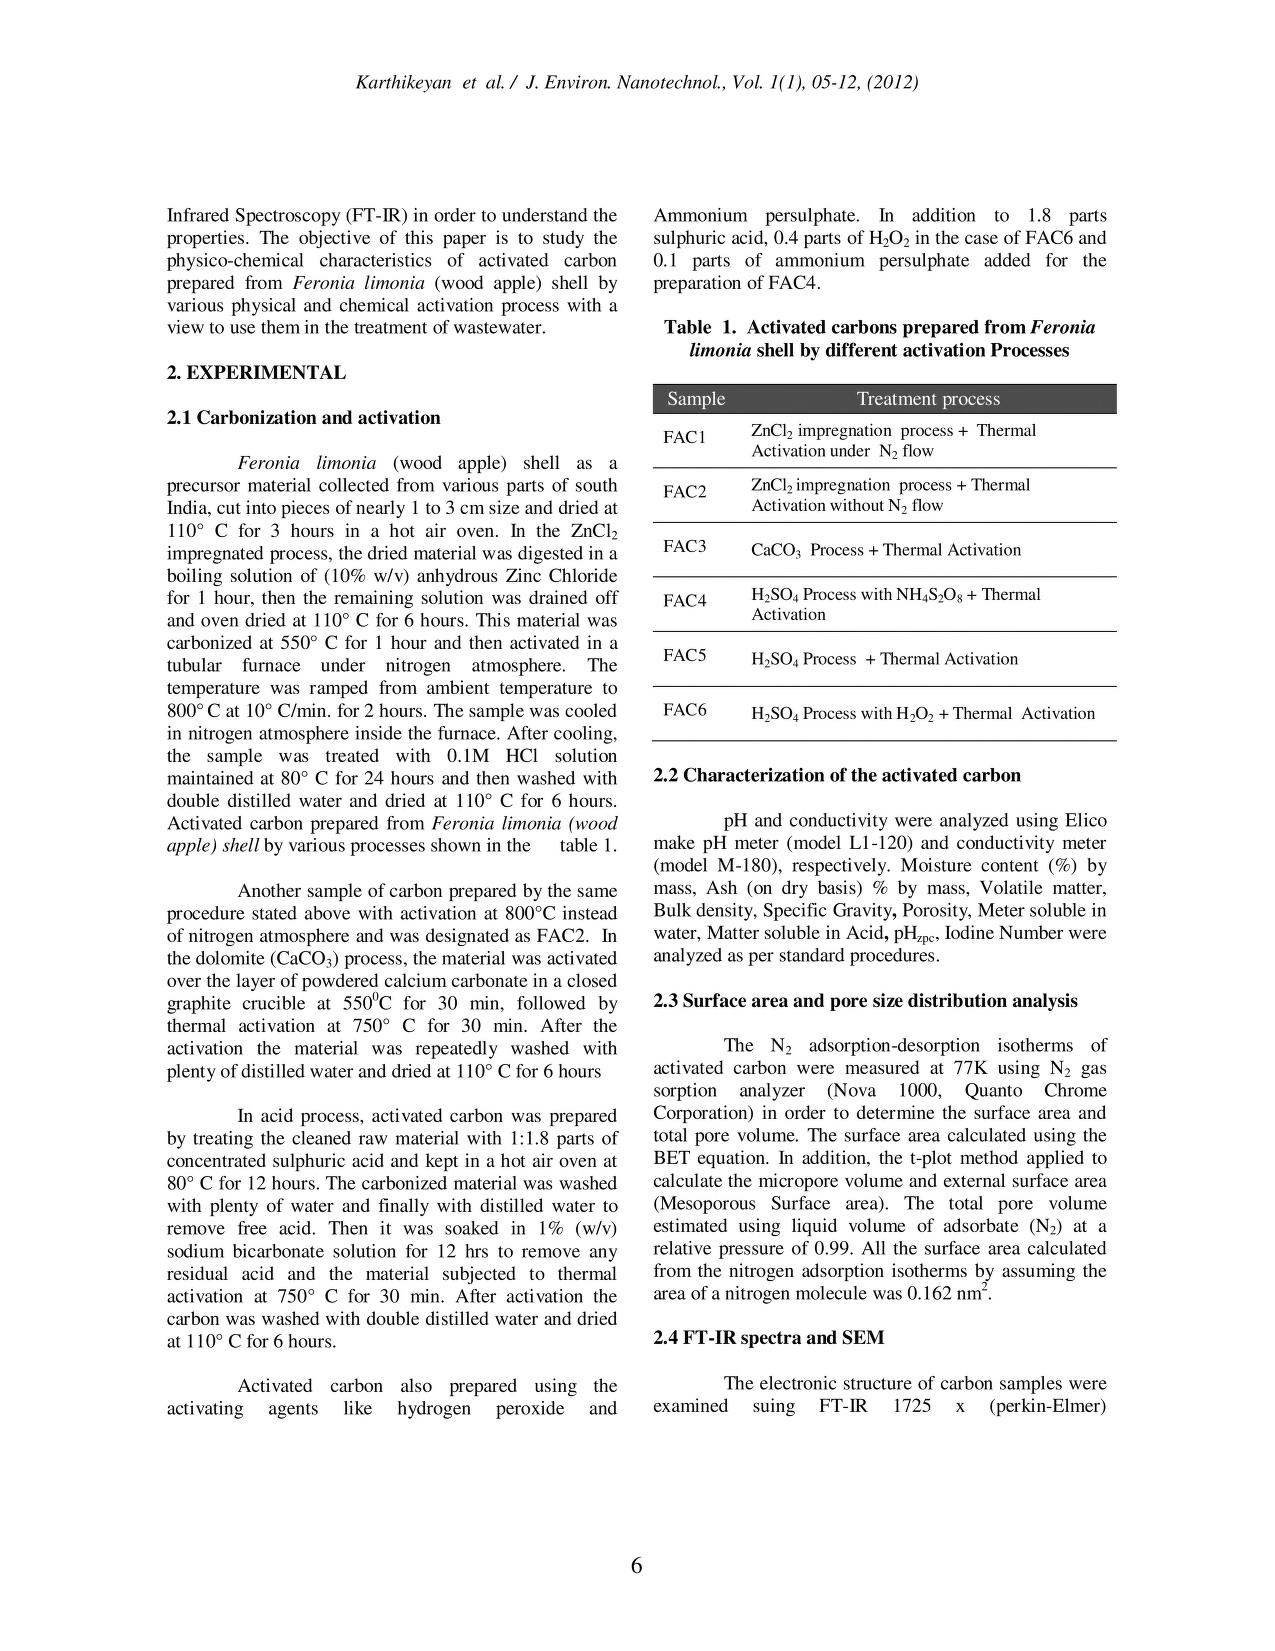 Journal of Environmental Nanotechnology - Archive : EditorJENT 